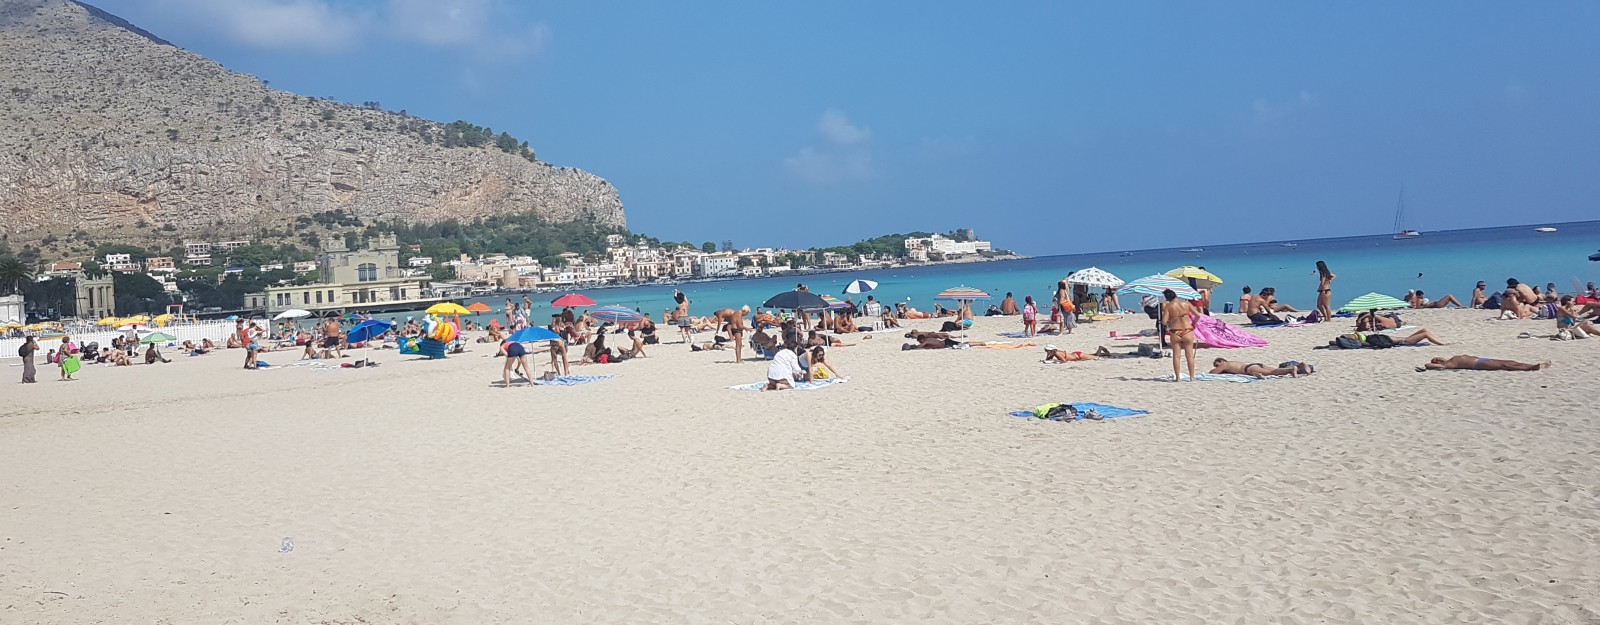 Relaxing on Mondello Beach in Palermo Sicily